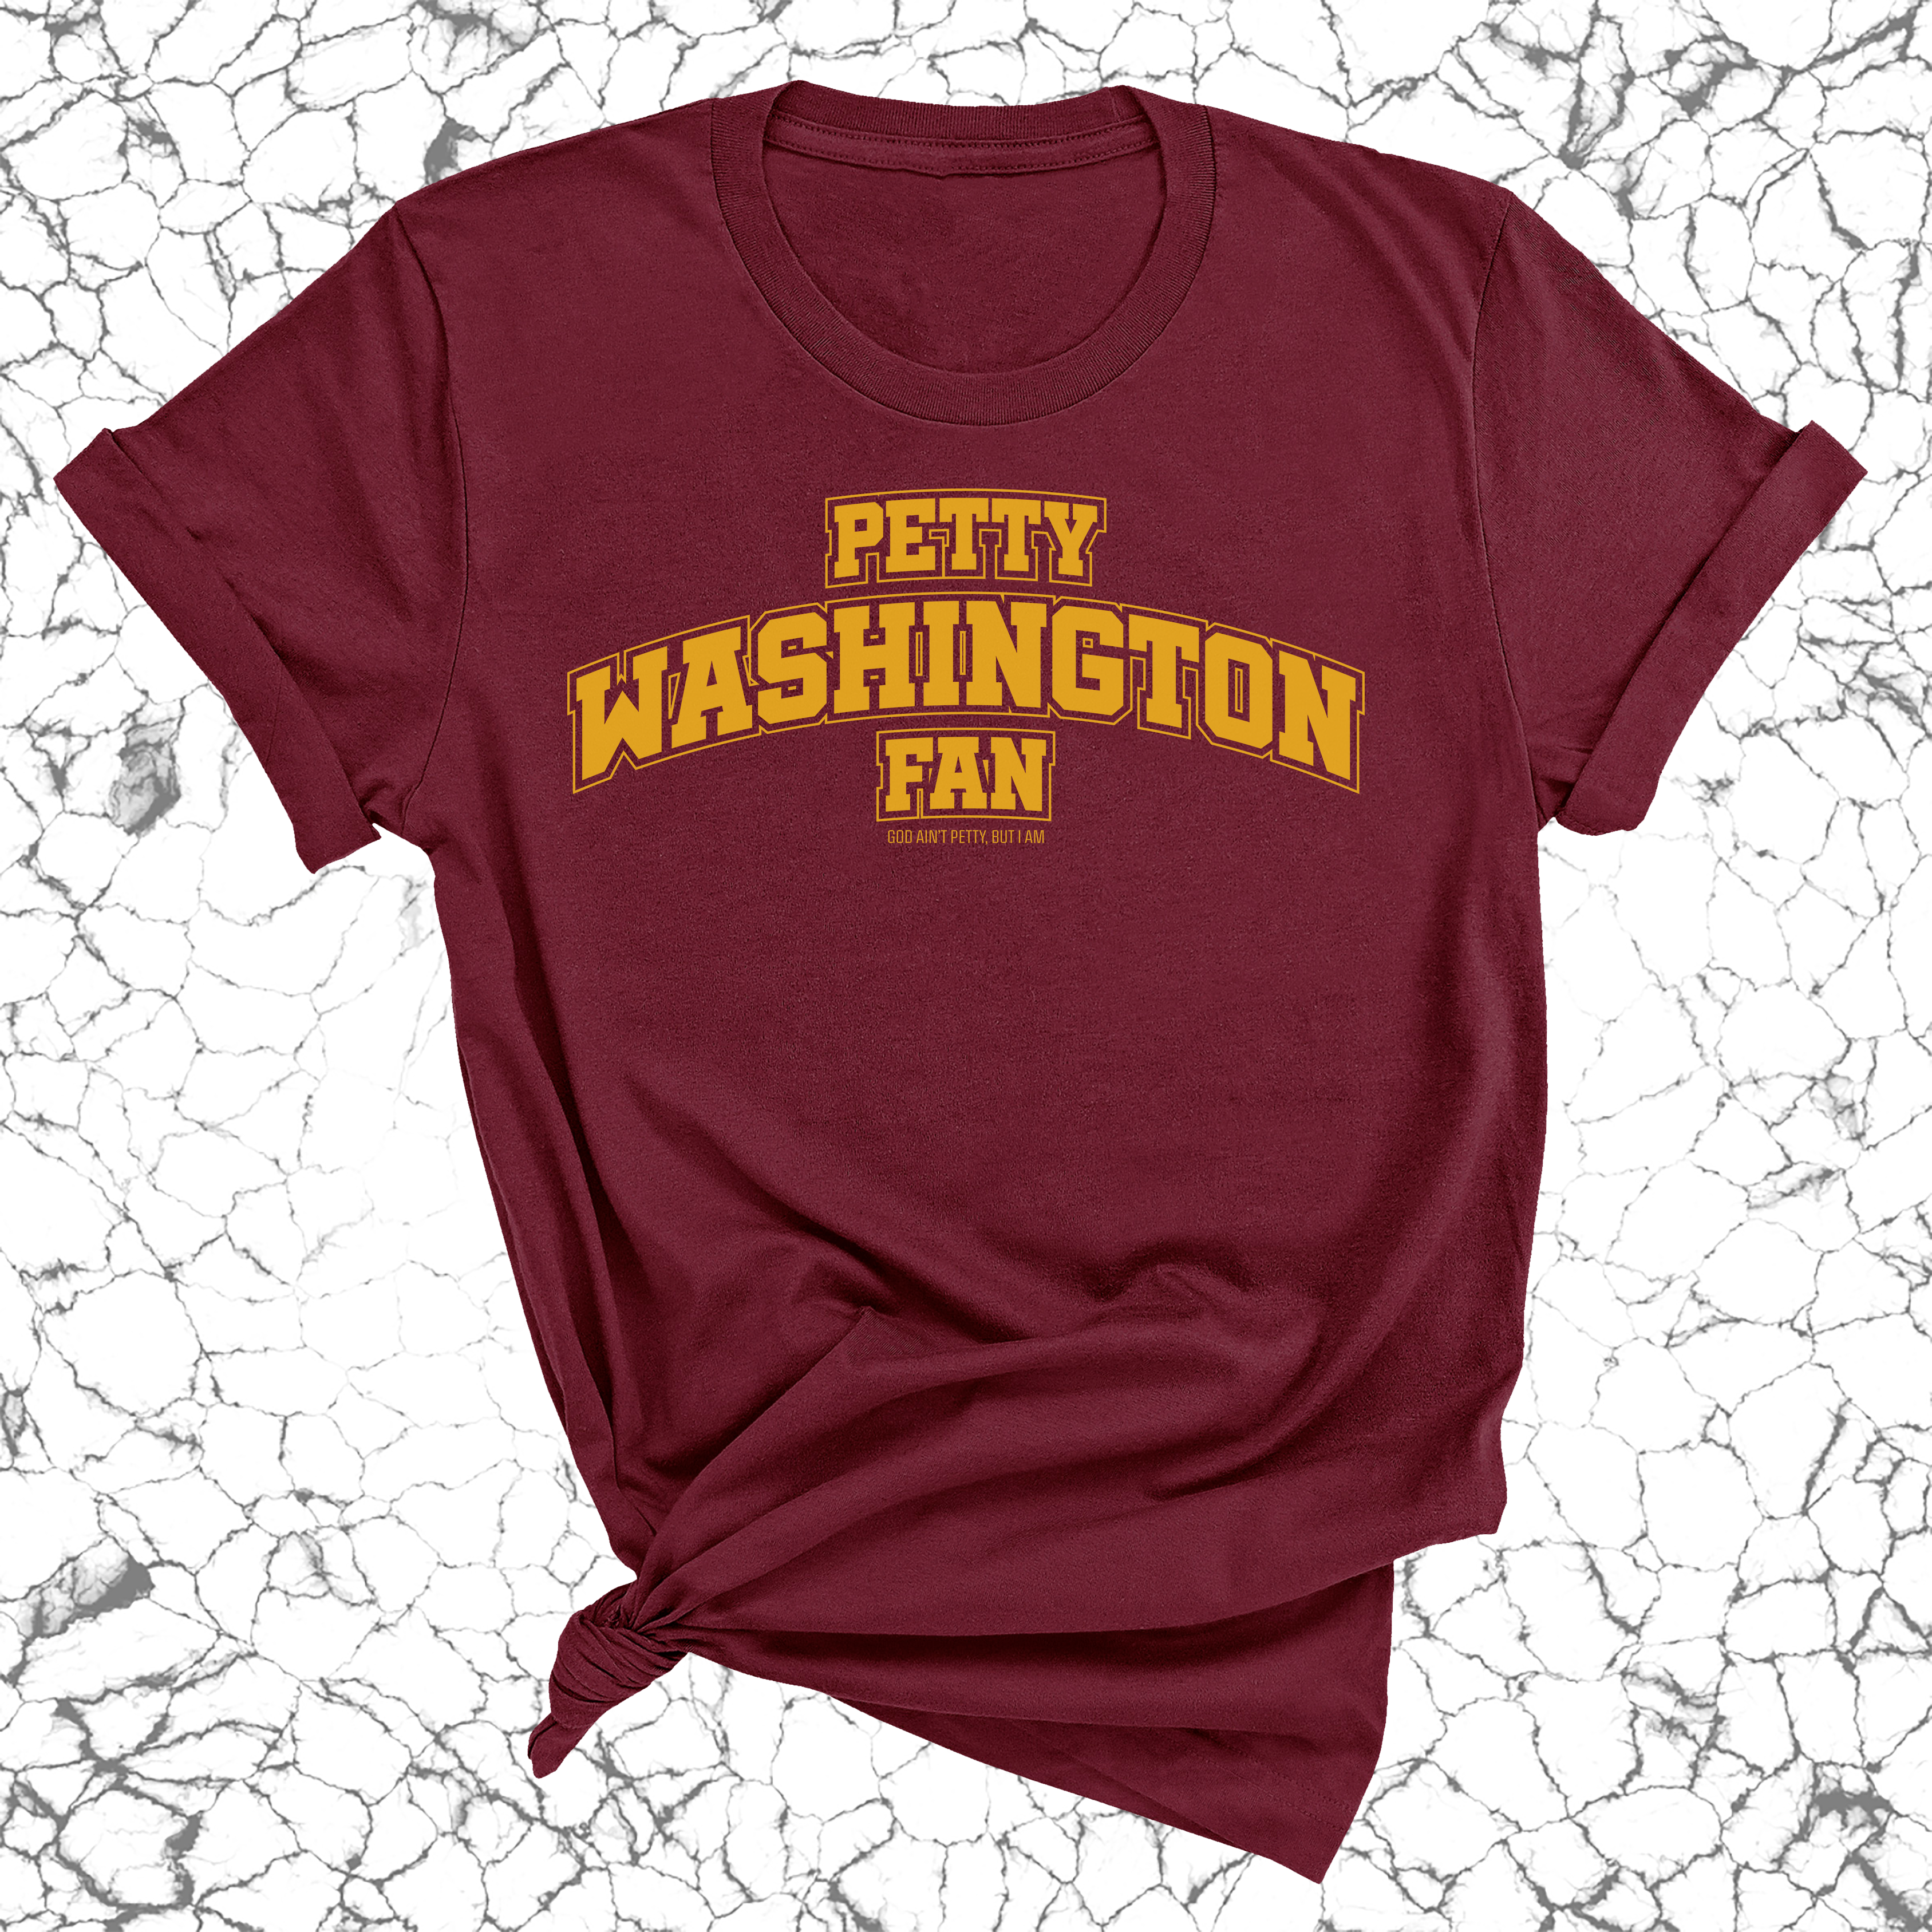 Petty Washington Fan Unisex Tee (Maroon/Gold)-T-Shirt-The Original God Ain't Petty But I Am